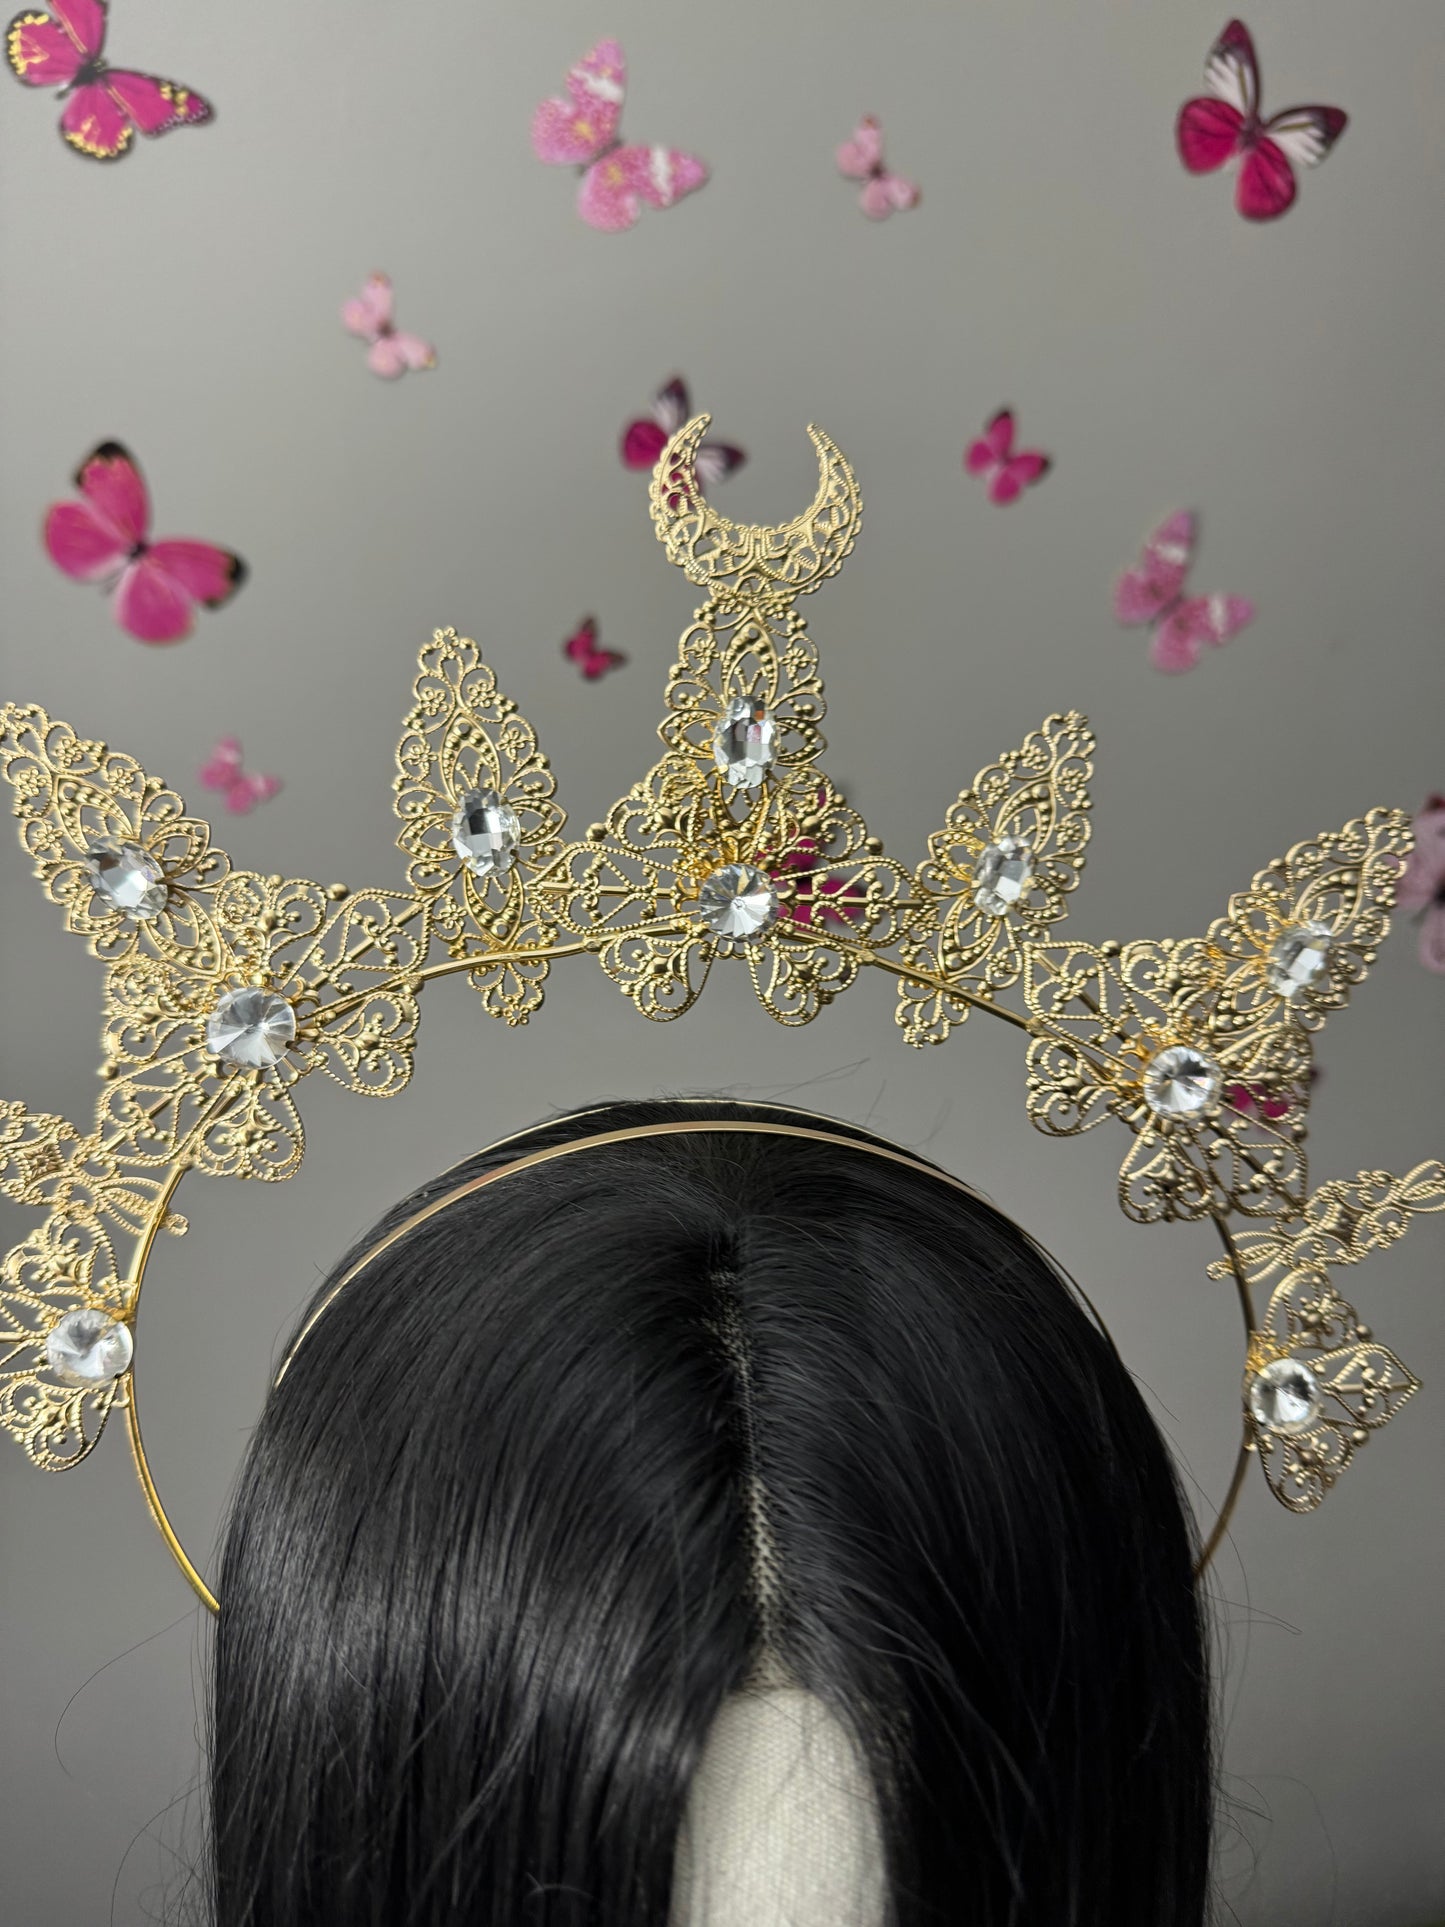 Empress crown